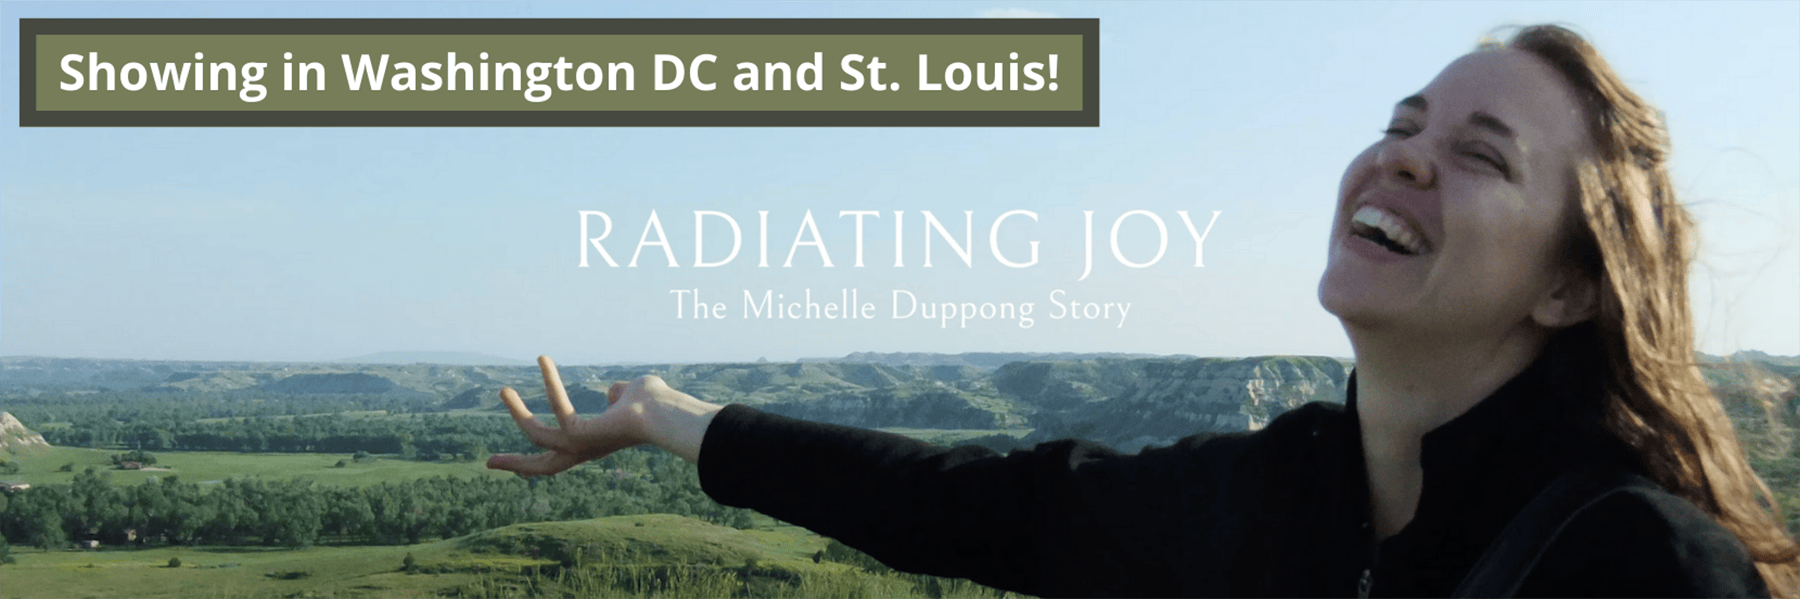 Radiating Joy - Showing in Washington DC and St. Louis